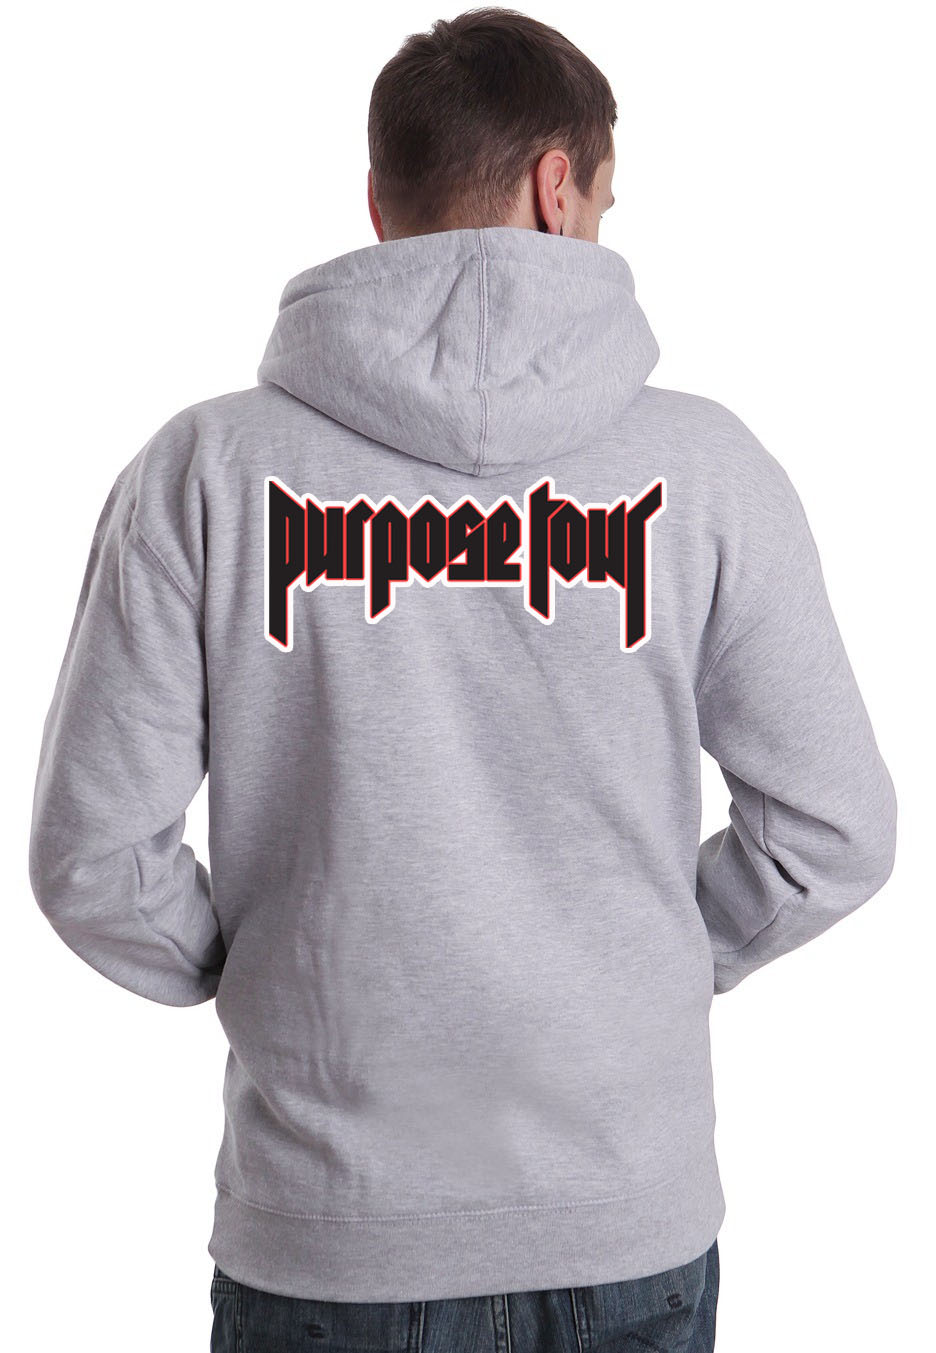 purpose tour hoodie jacket